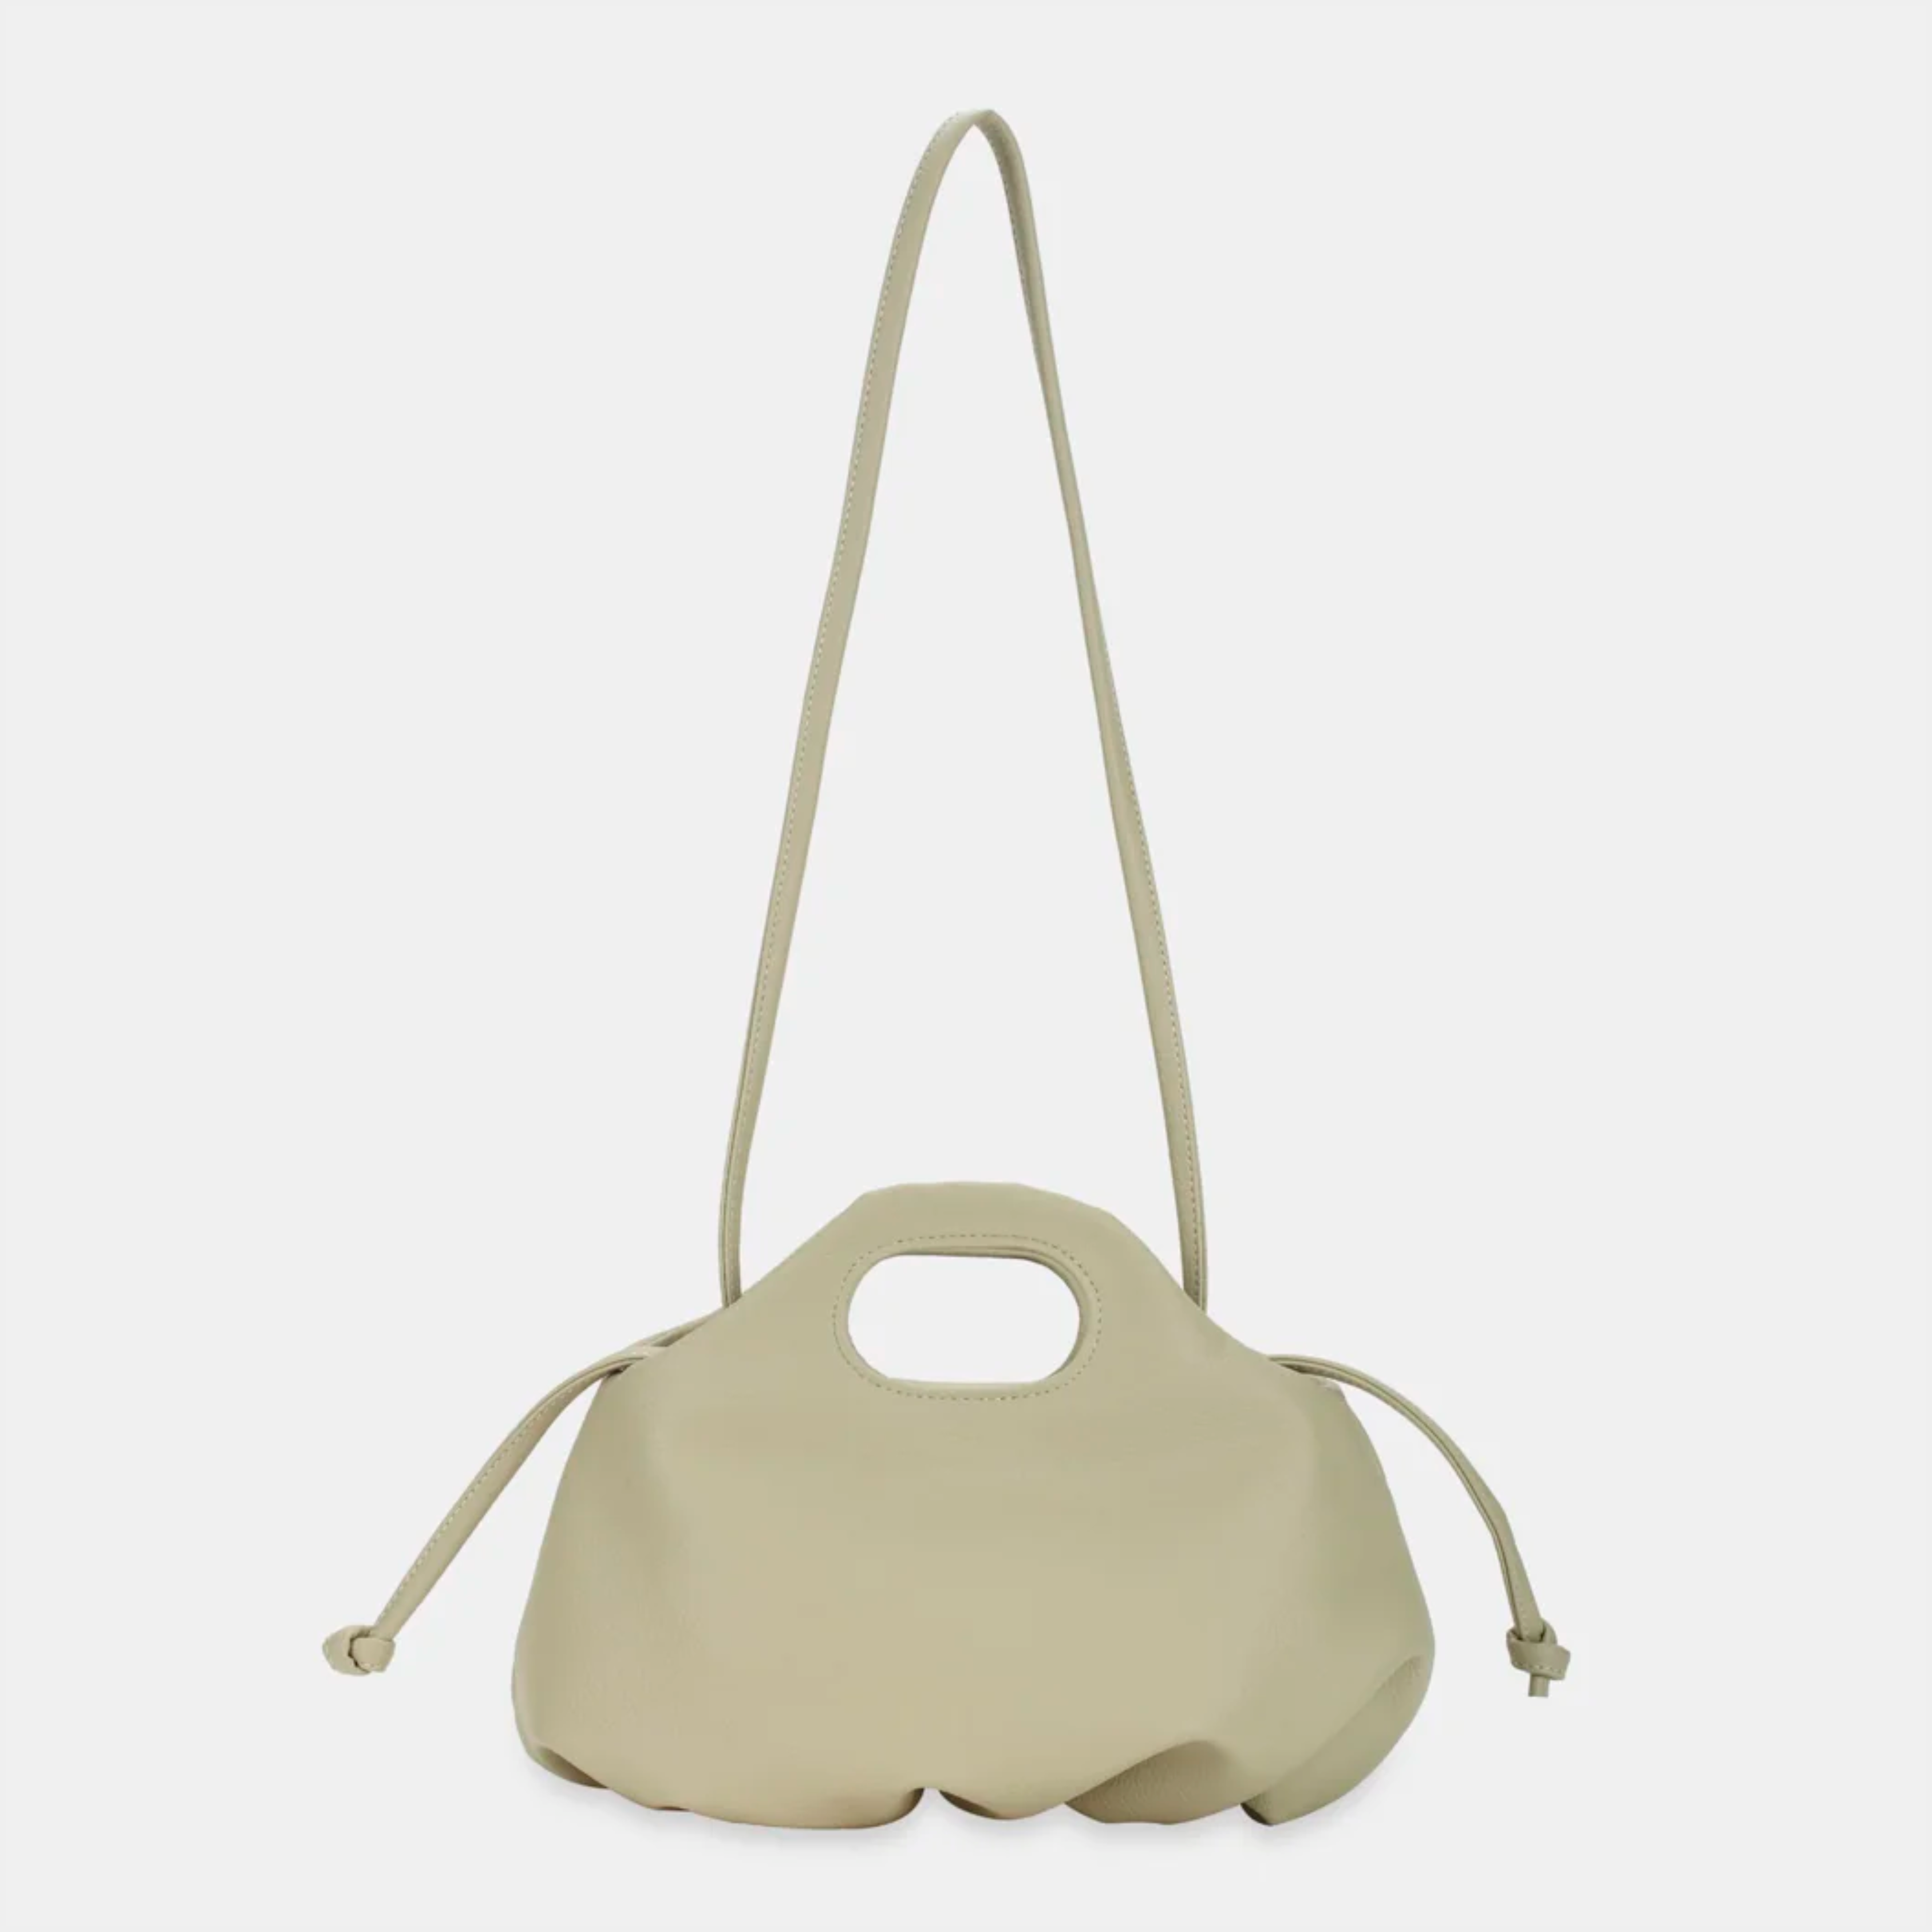 Flower M (medium) handbag in beige